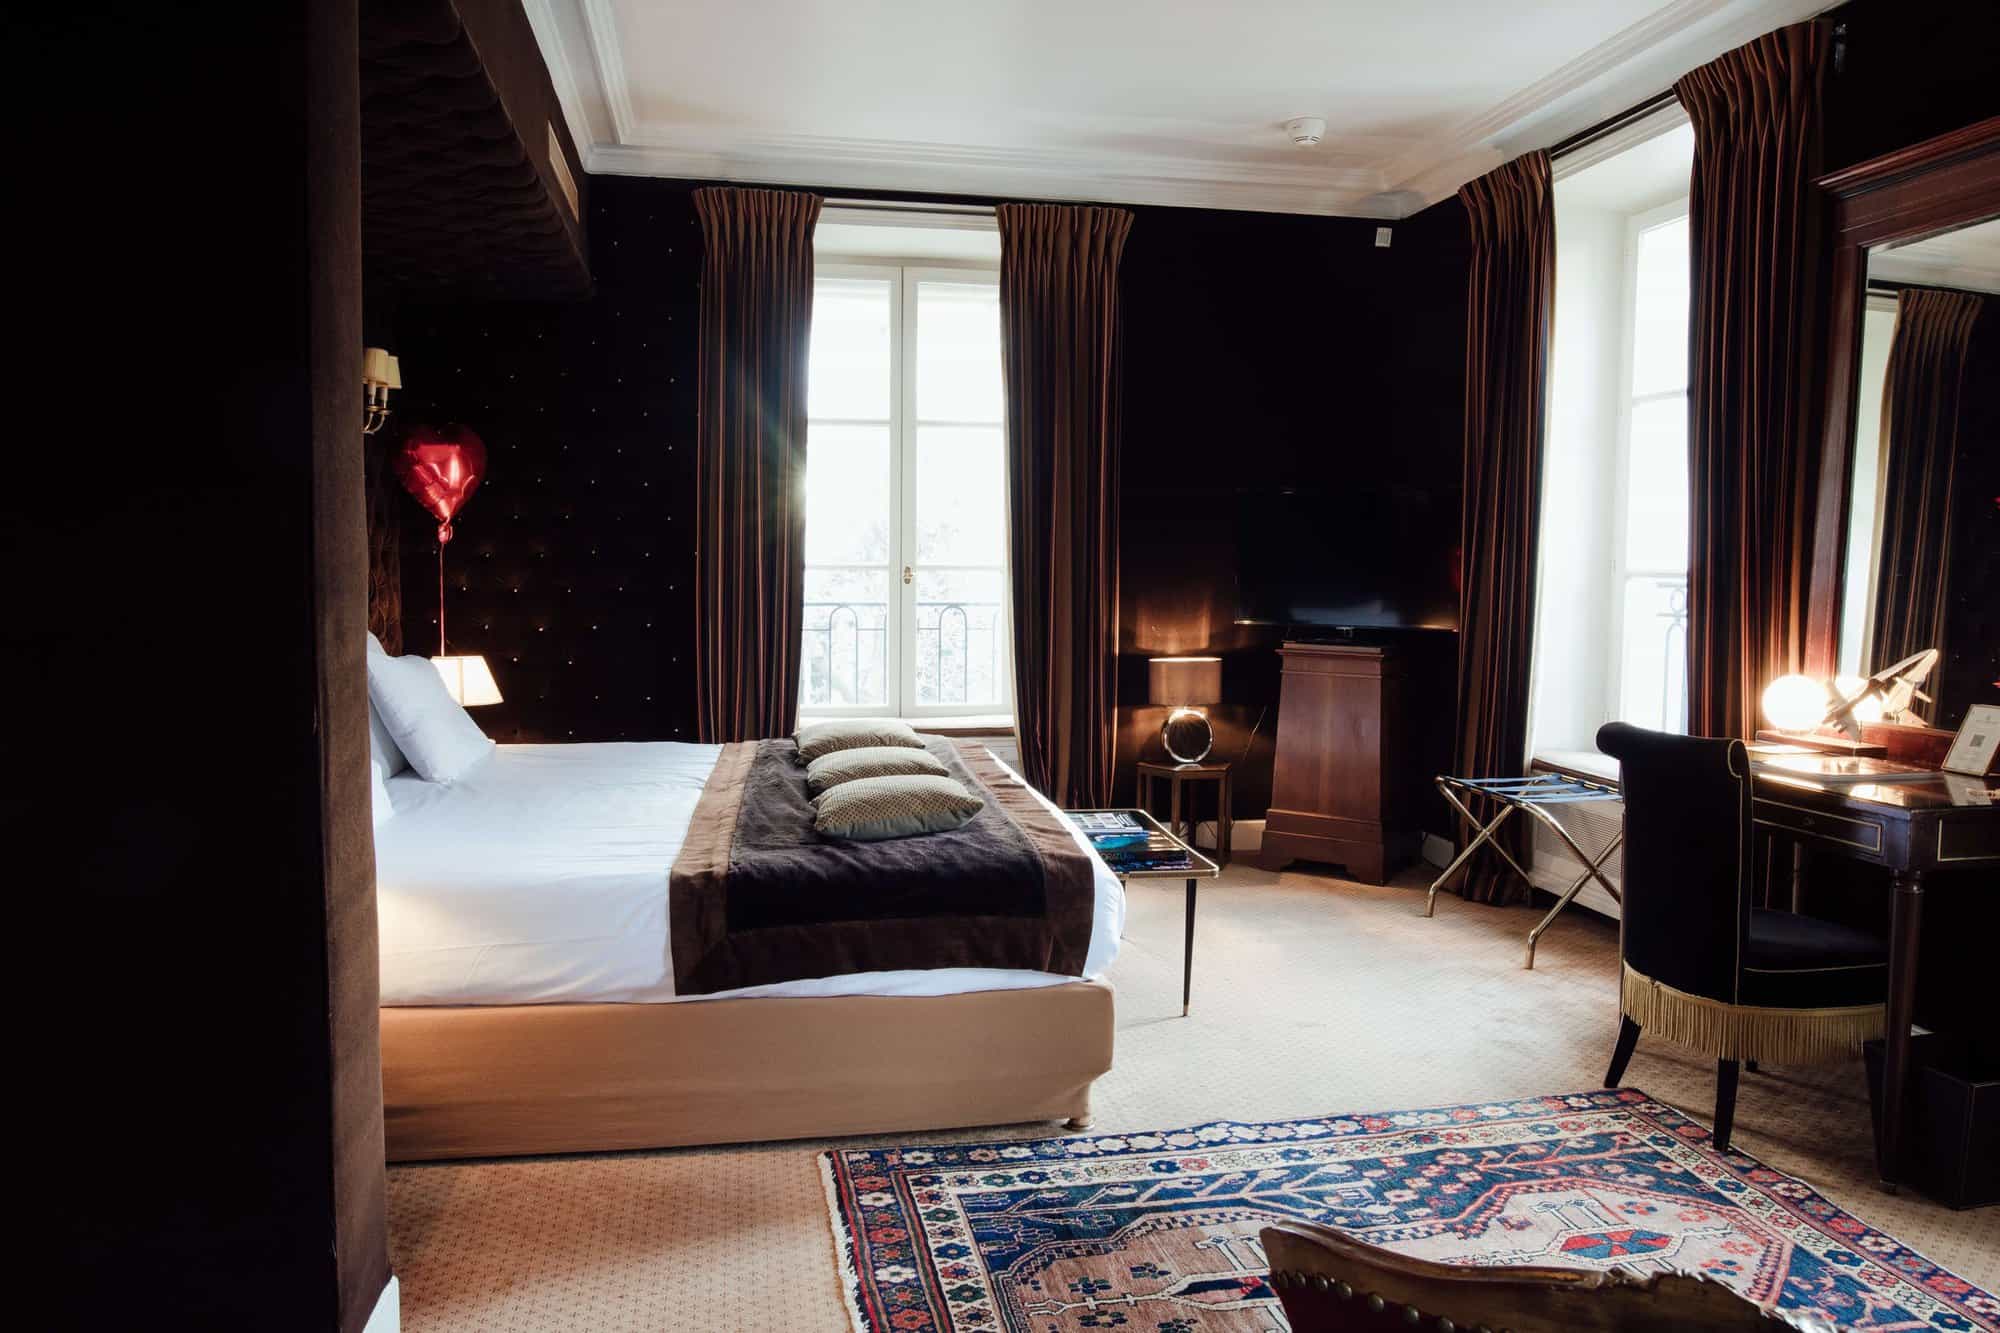 The Best Boutique Hotels in Paris: Hidden Addresses